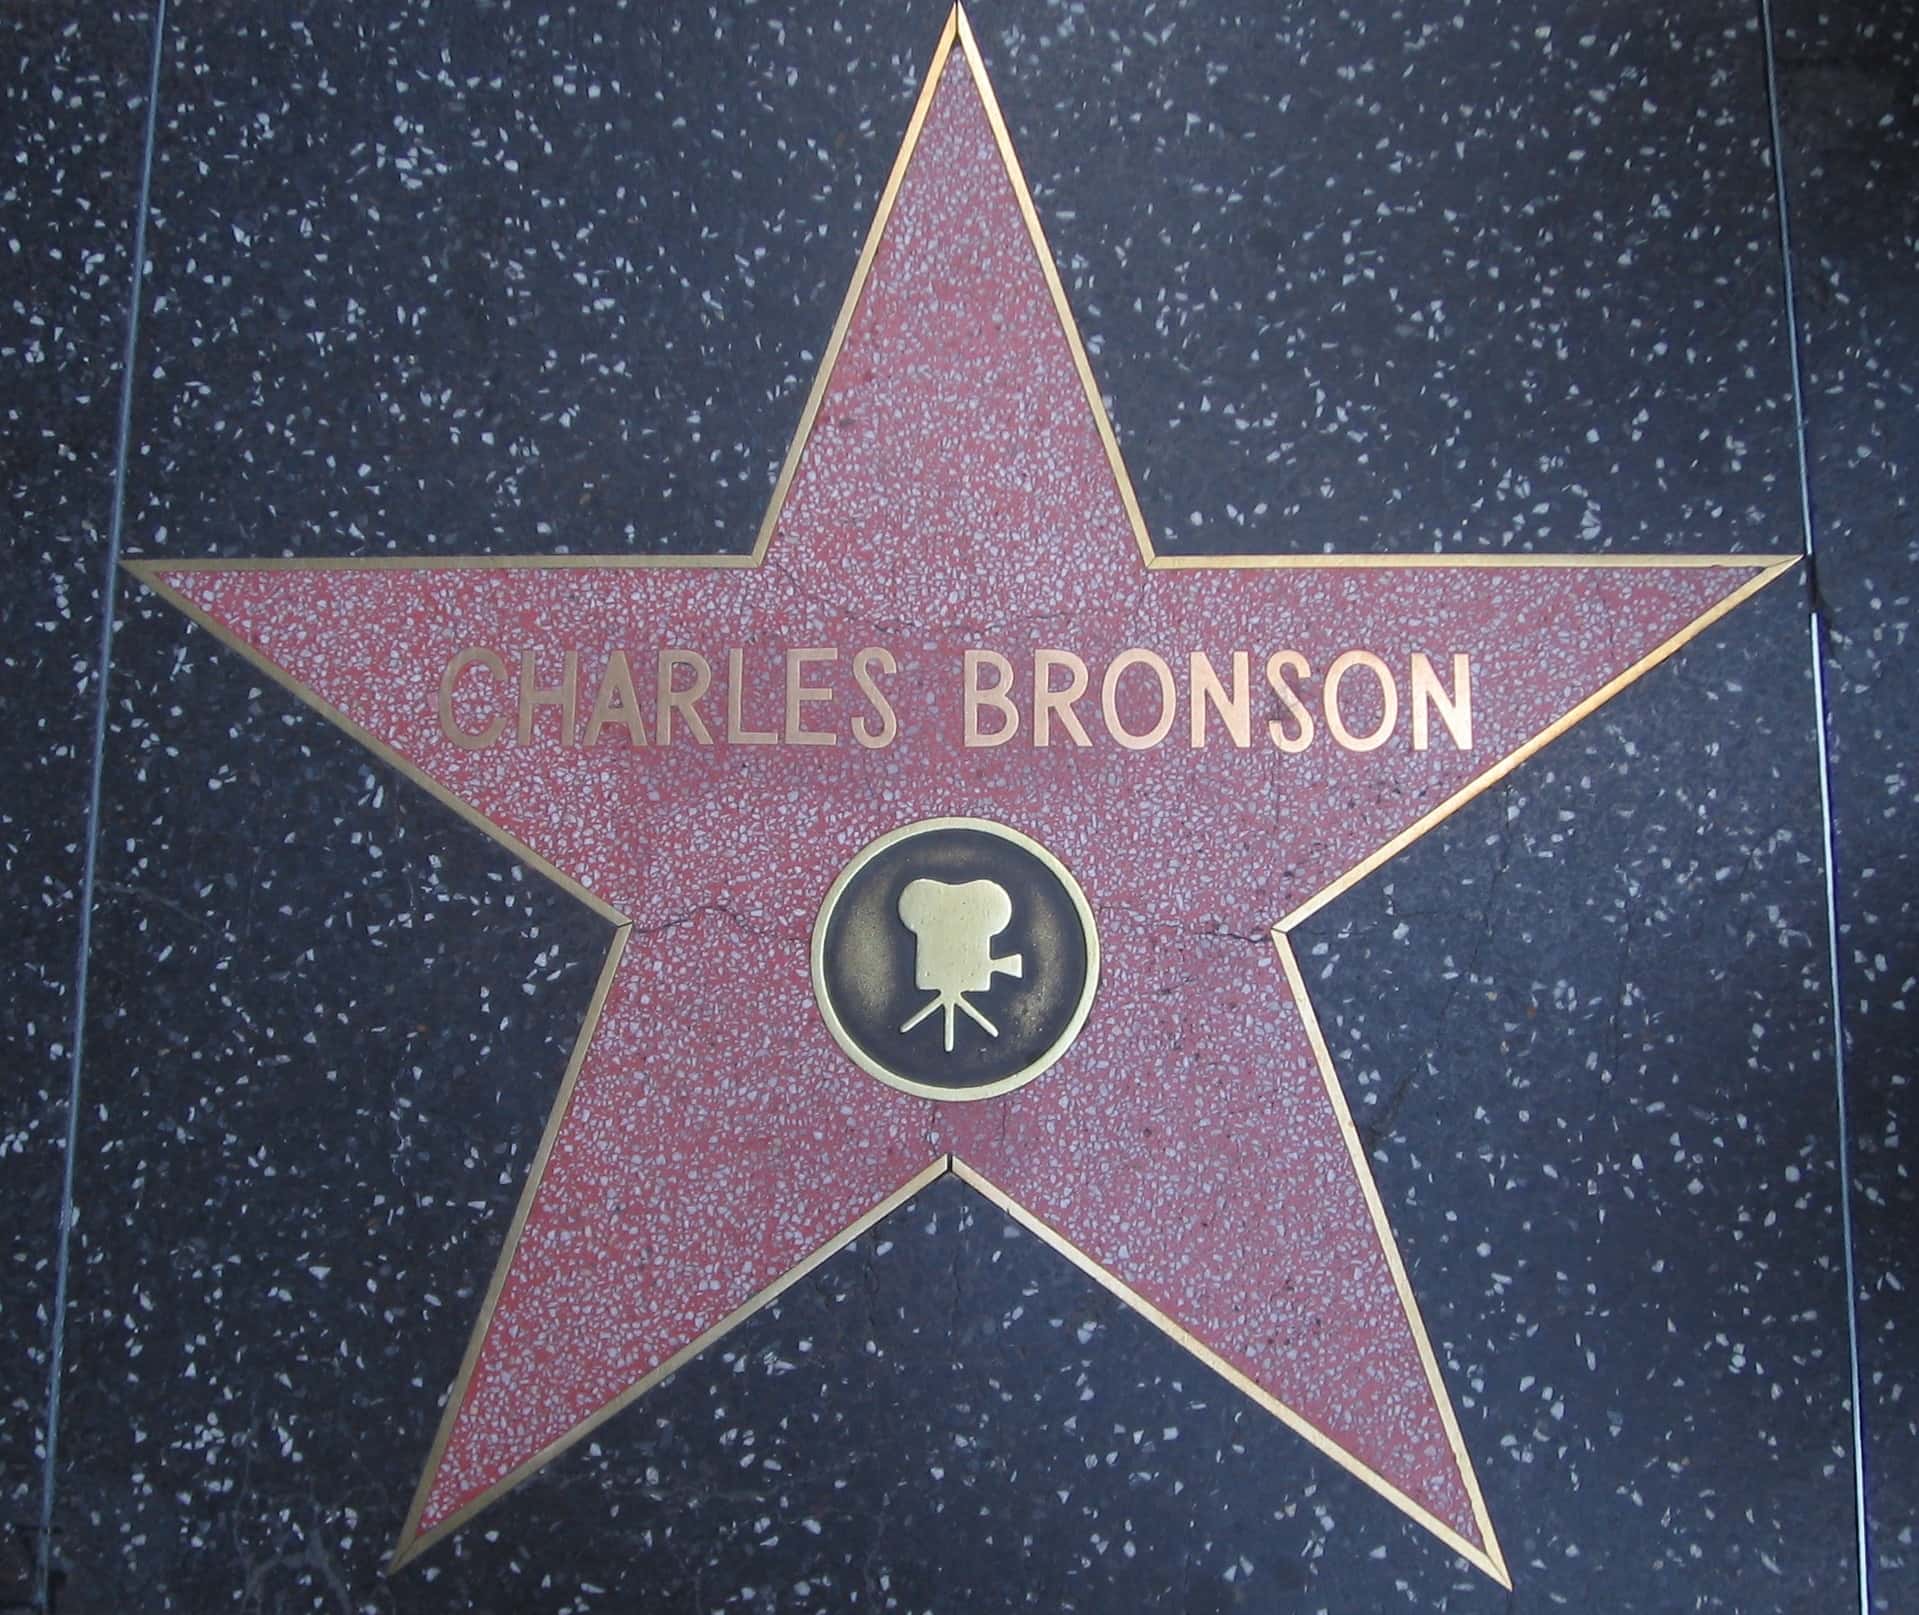 Charles Bronson Facts